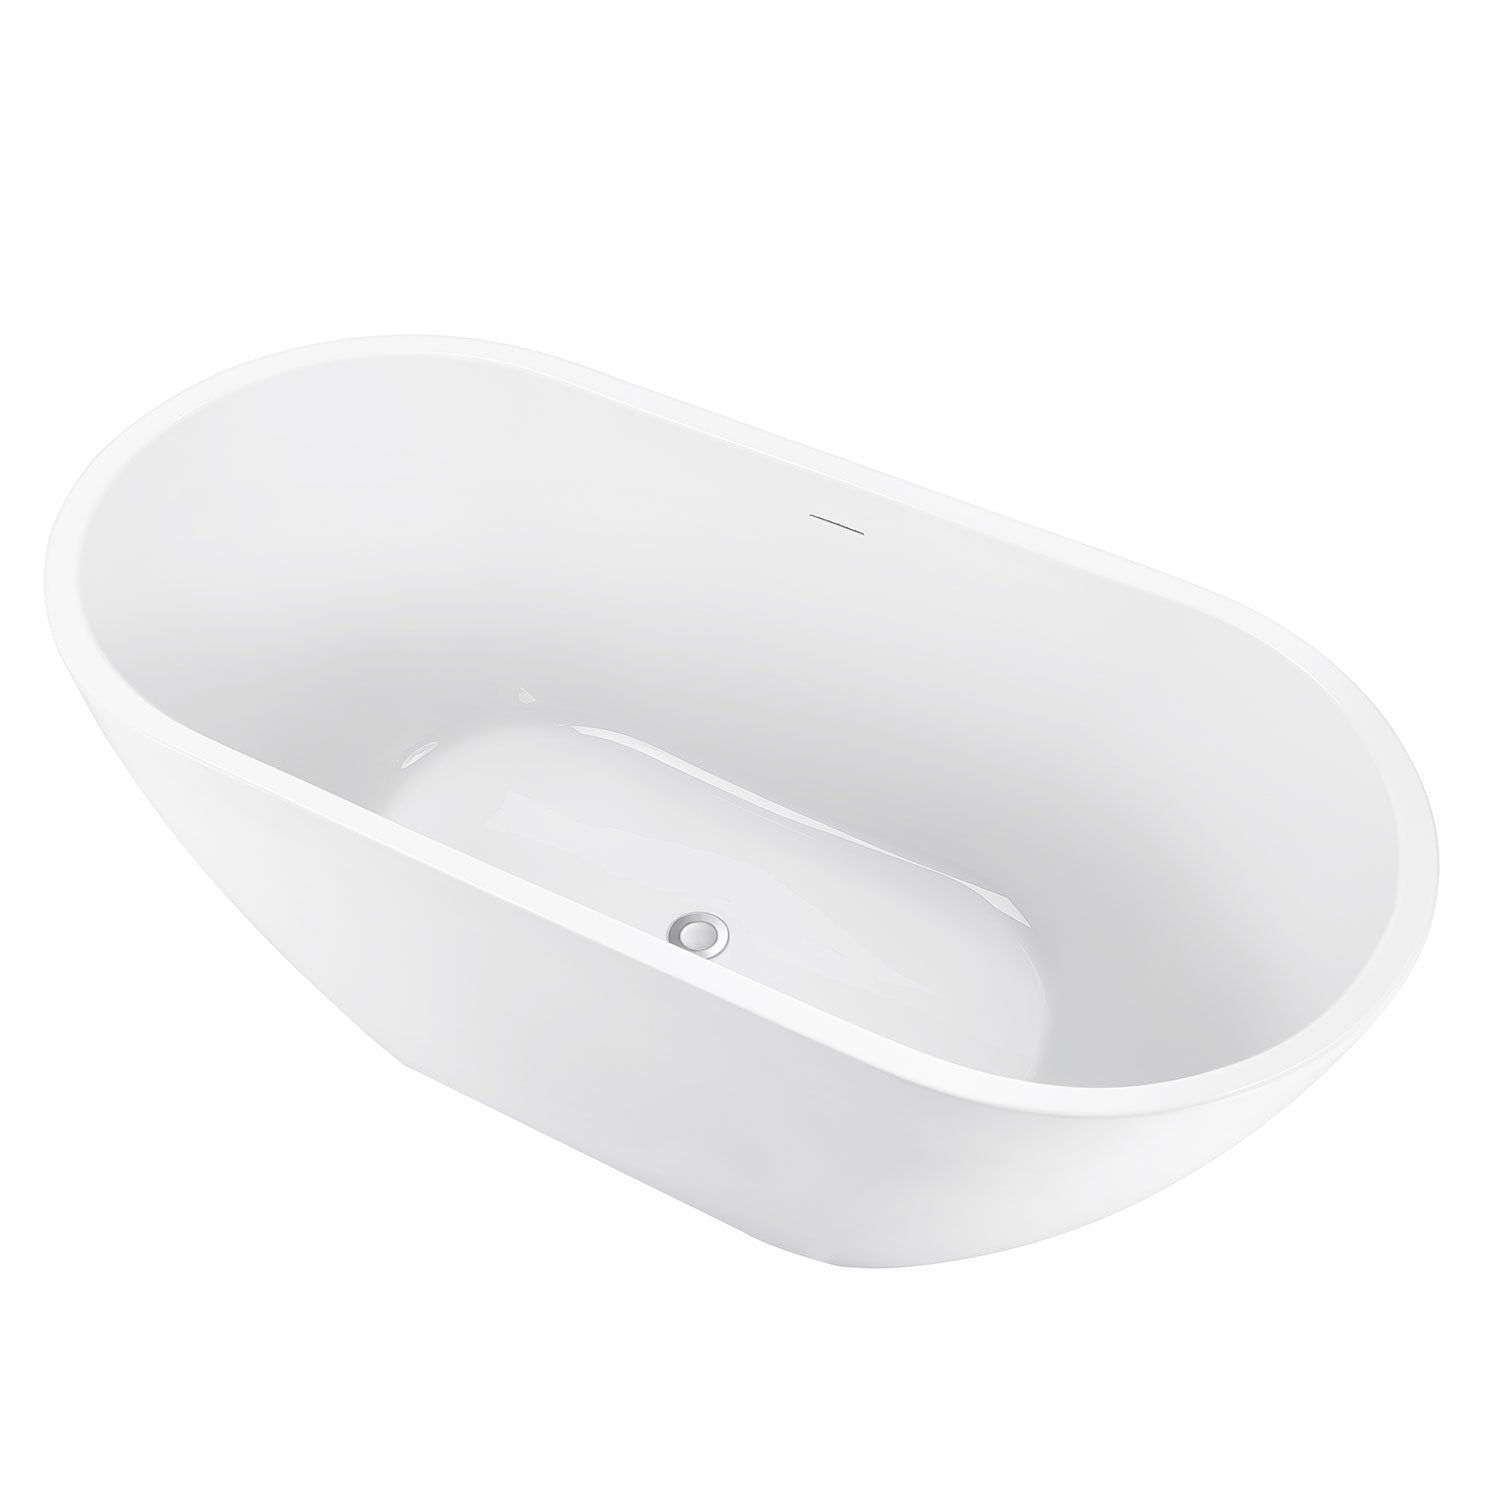 59" 100% Acrylic Freestanding Oval Contemporary Soaking Bathtub